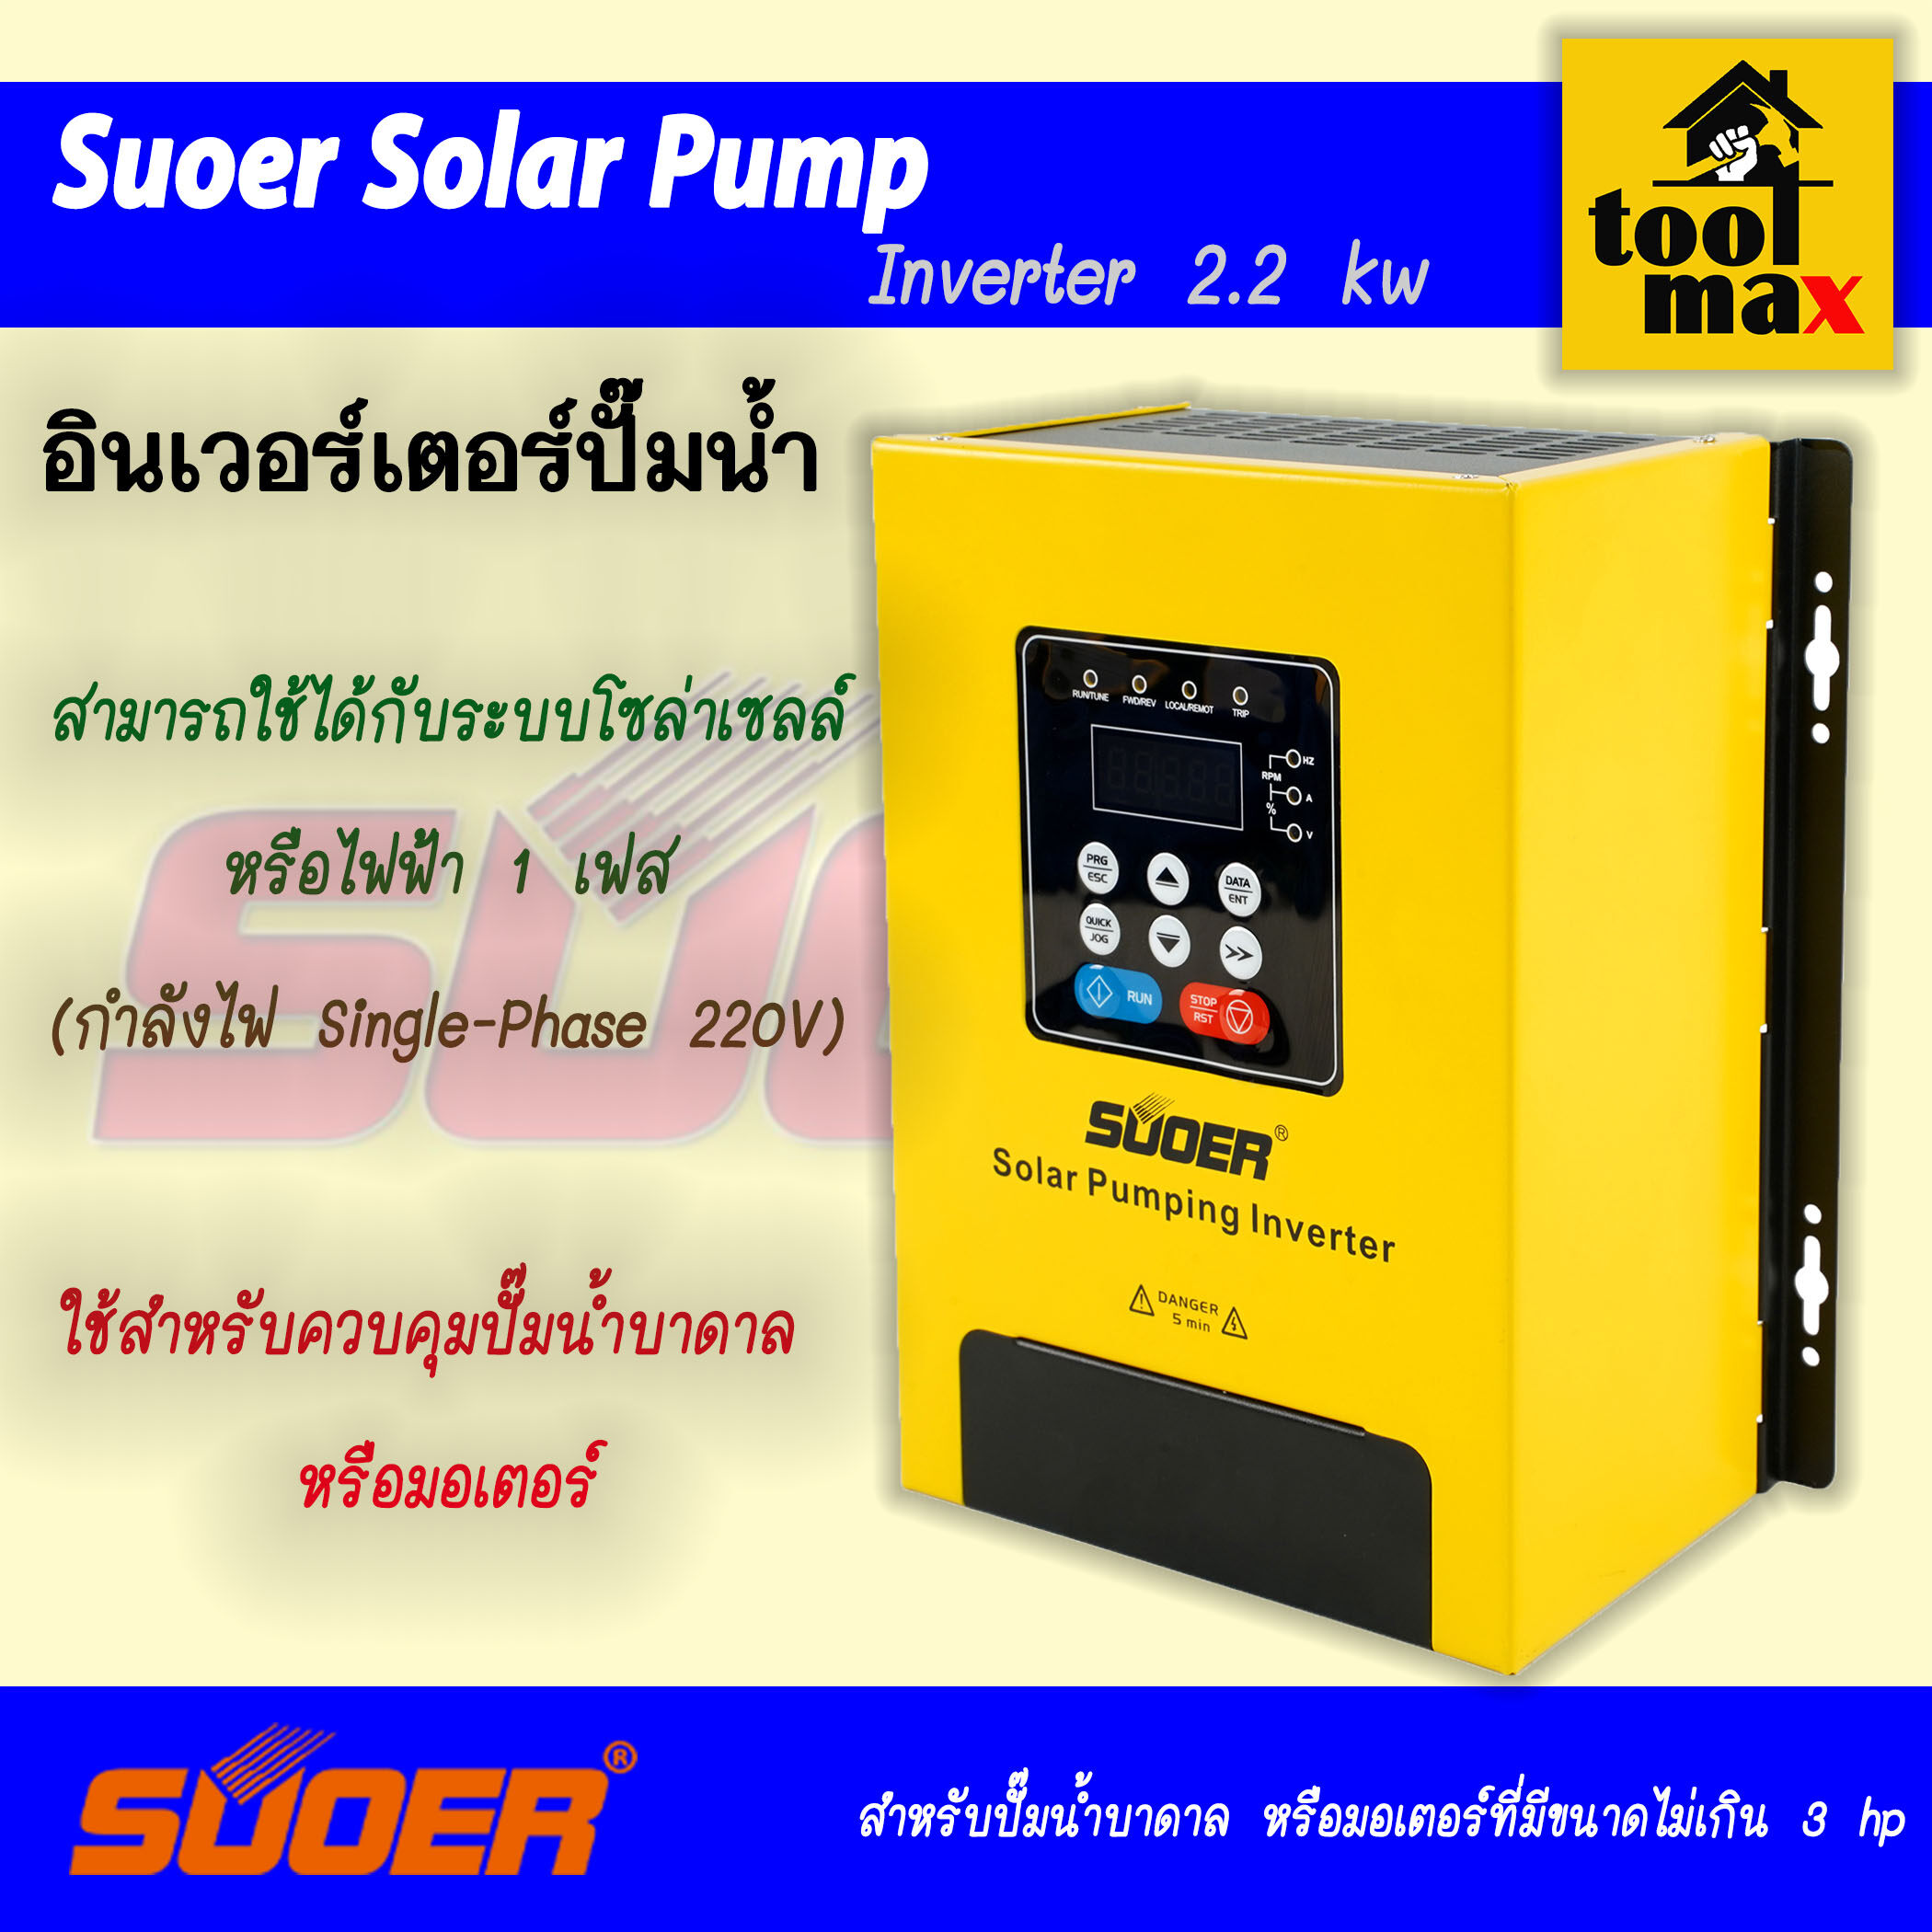 SUOER Solar Pump Inverter 2.2kw อินเวอร์เตอร์ สำหรับปั๊มน้ำบาดาล หรือมอเตอร์ ใช้ระบบโซล่าเซลล์  รุ่น PV100-2R2G-SS